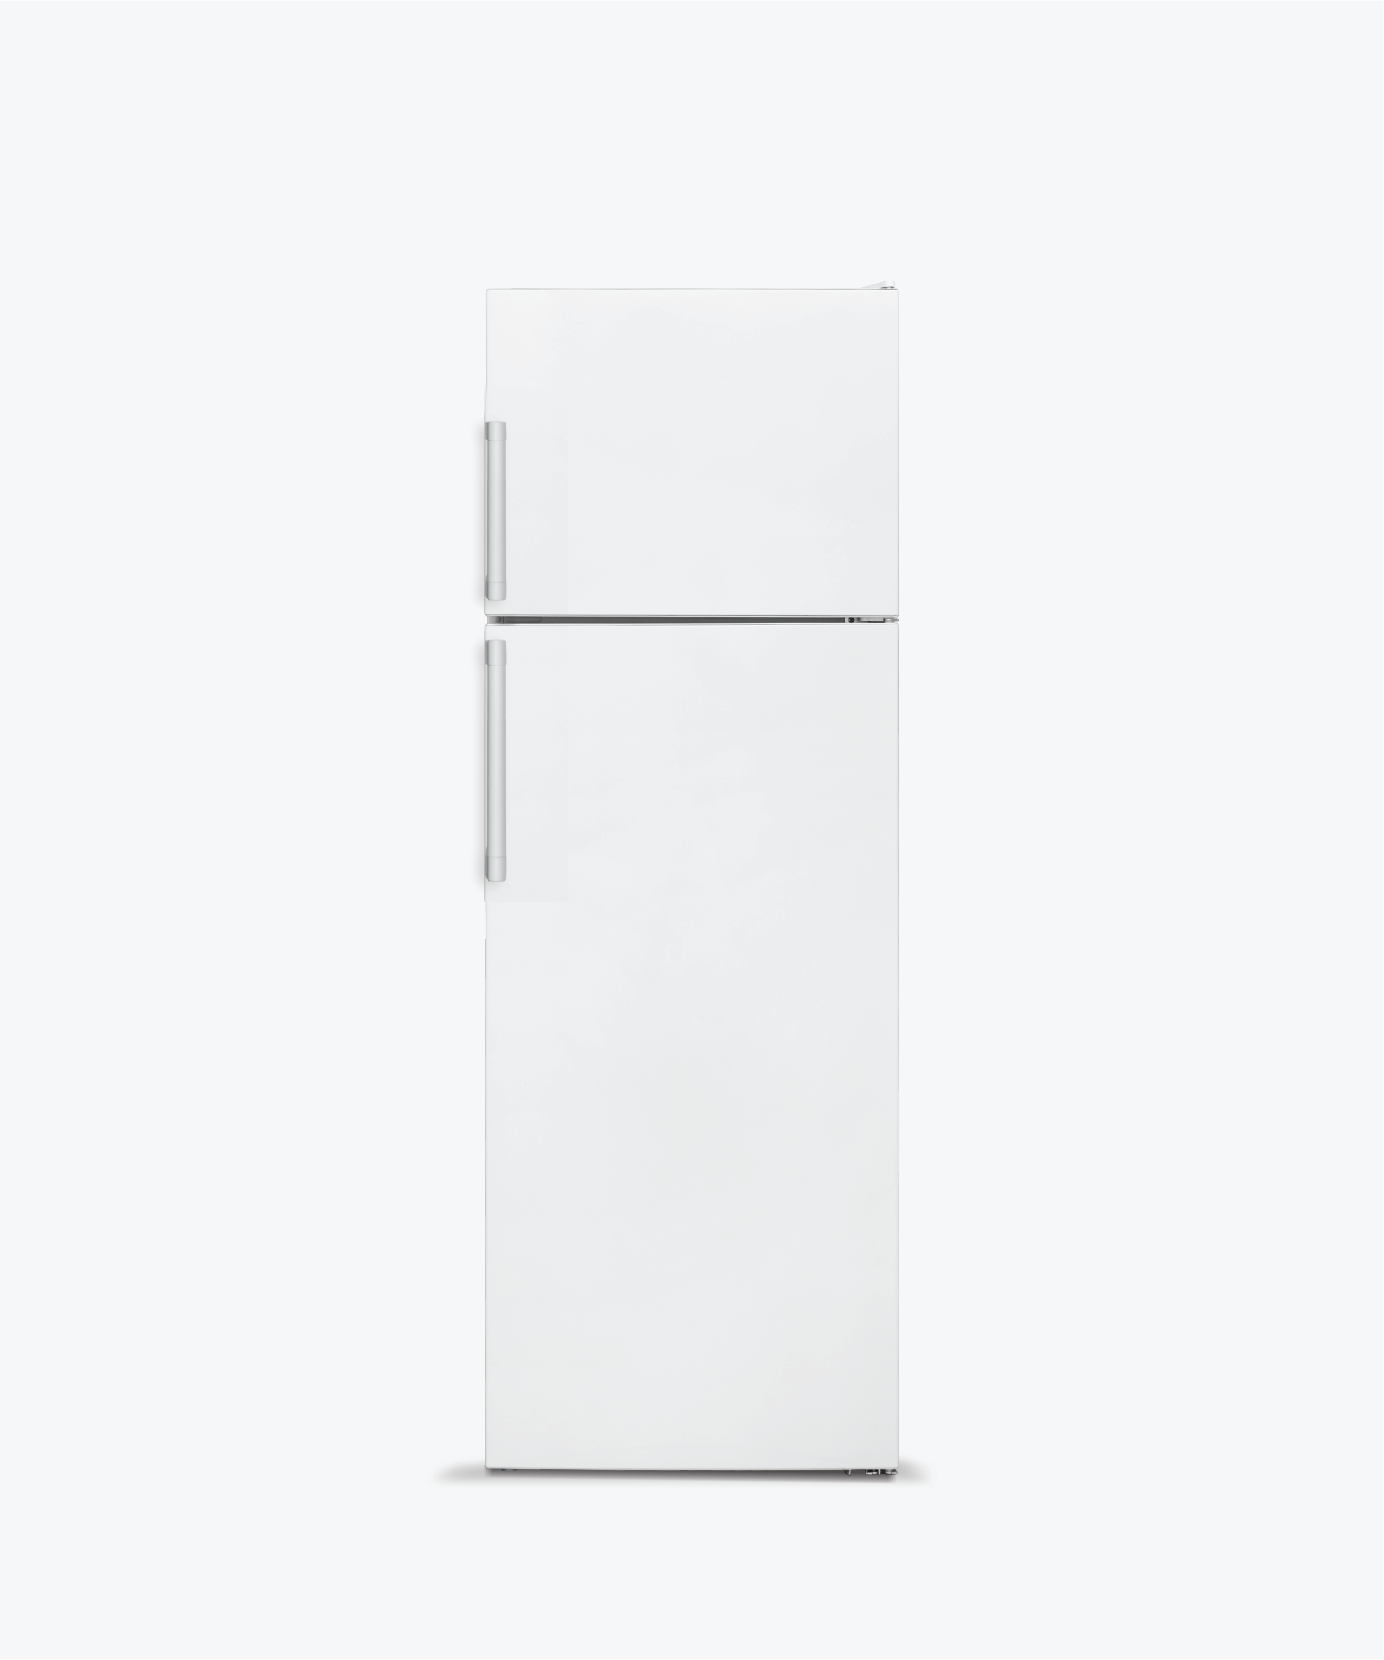 16 Feet White Refrigerator||Refrigerators 